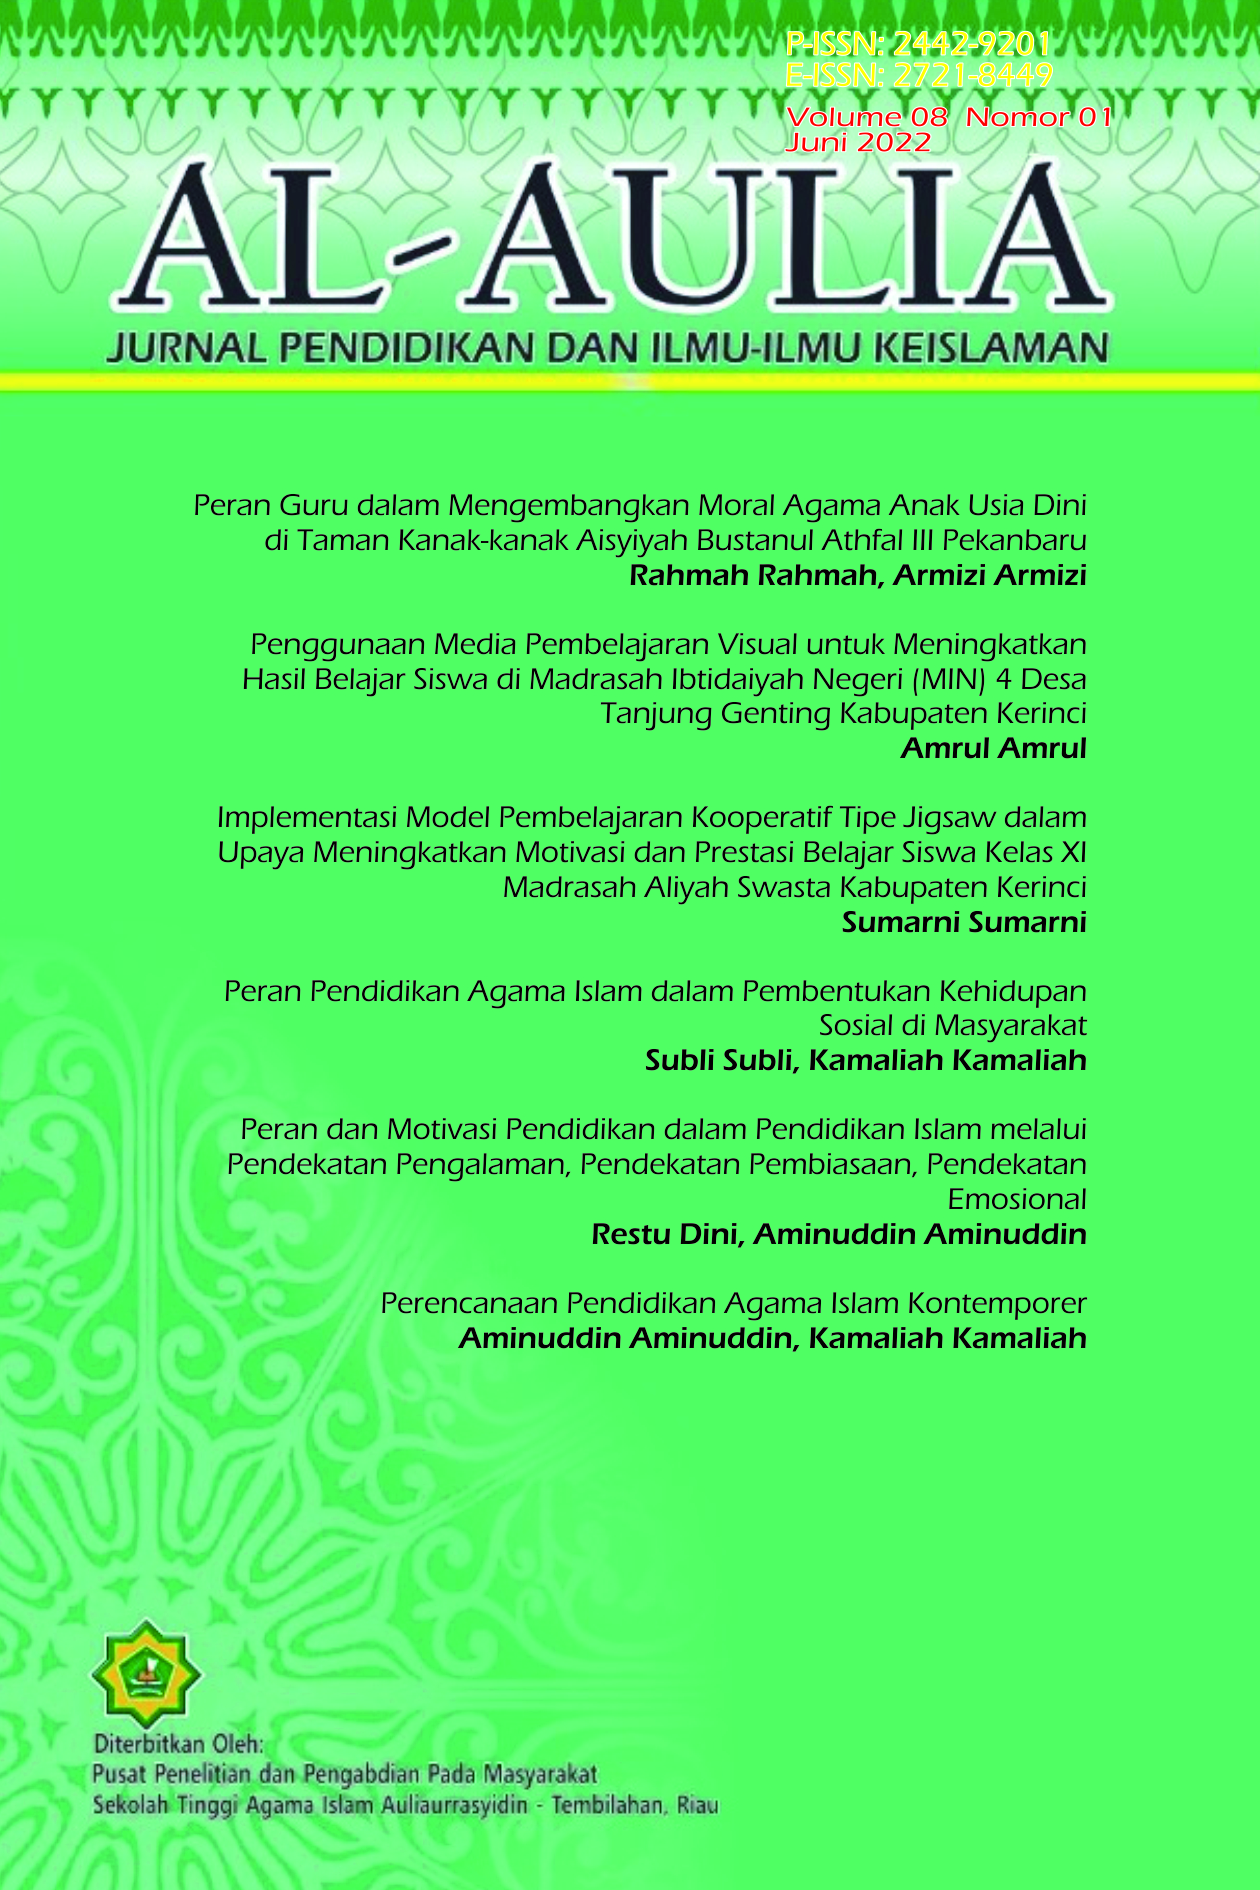 					View Vol. 8 No. 1 (2022): Al-Aulia: Jurnal Pendidikan dan Ilmu-Ilmu Keislaman
				